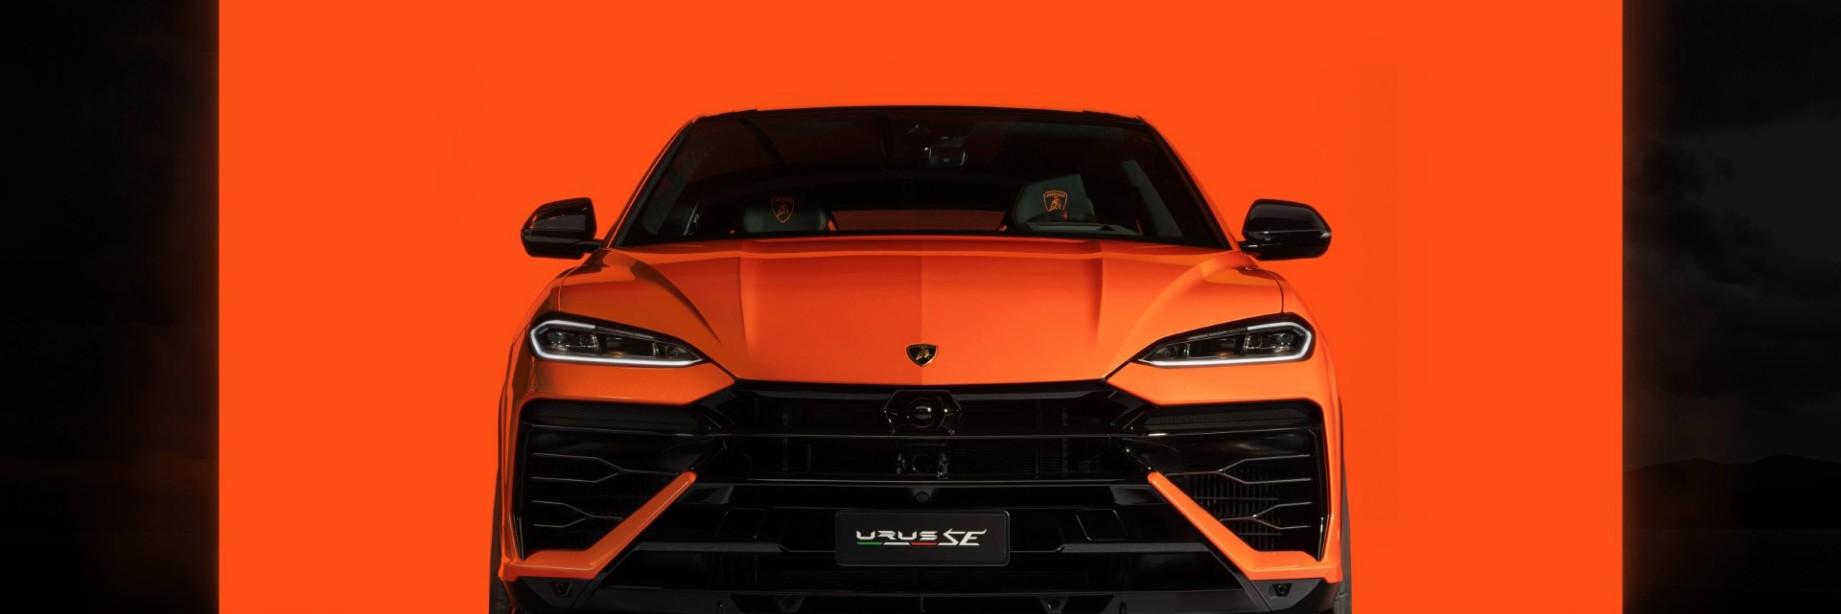 Lamborghini Urus SE: Primul super SUV hibrid plug-in